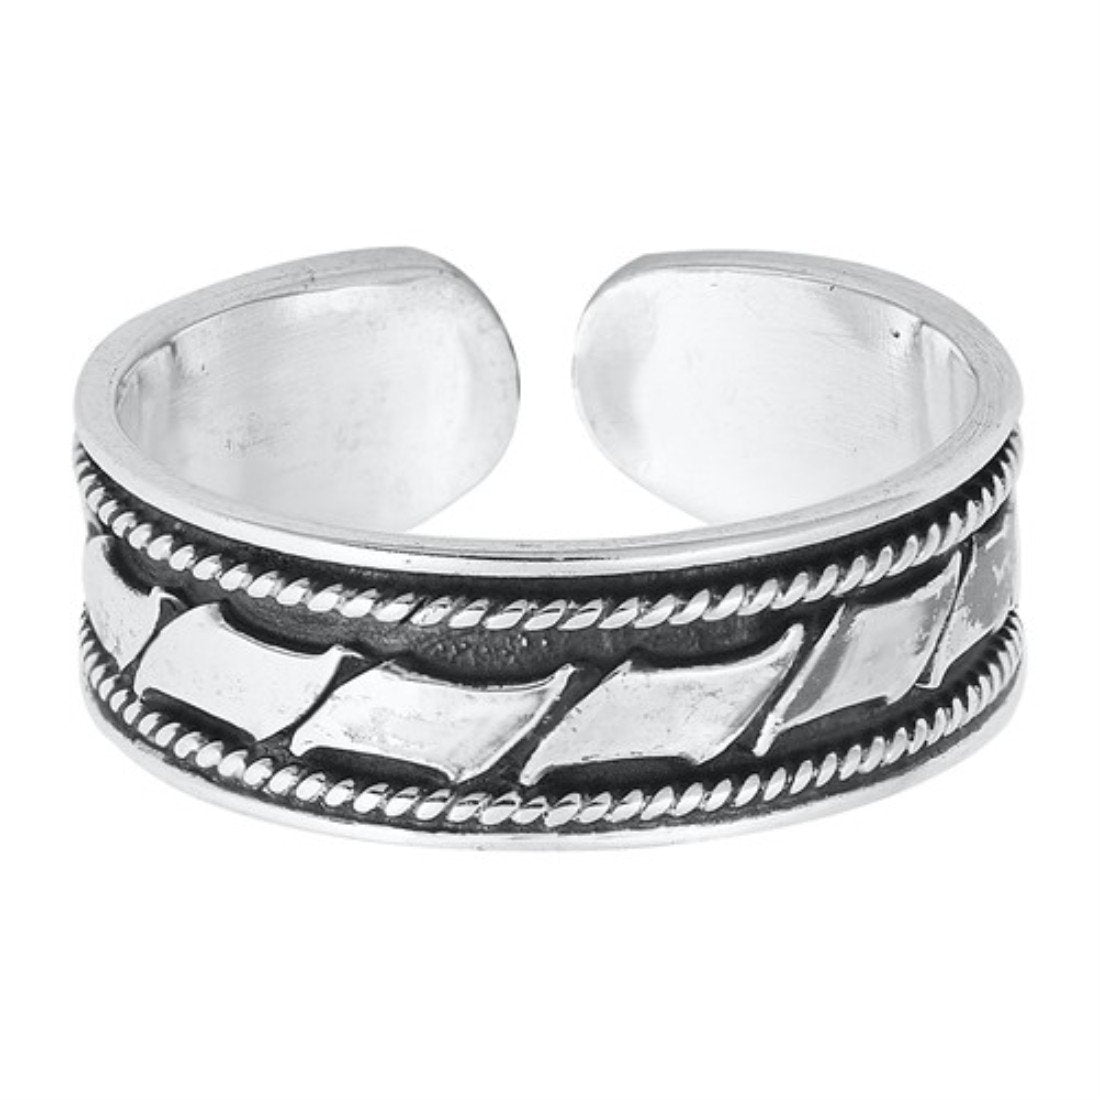 Bali Design Silver Toe Ring Adjustable Band 925 Sterling Silver (5mm)